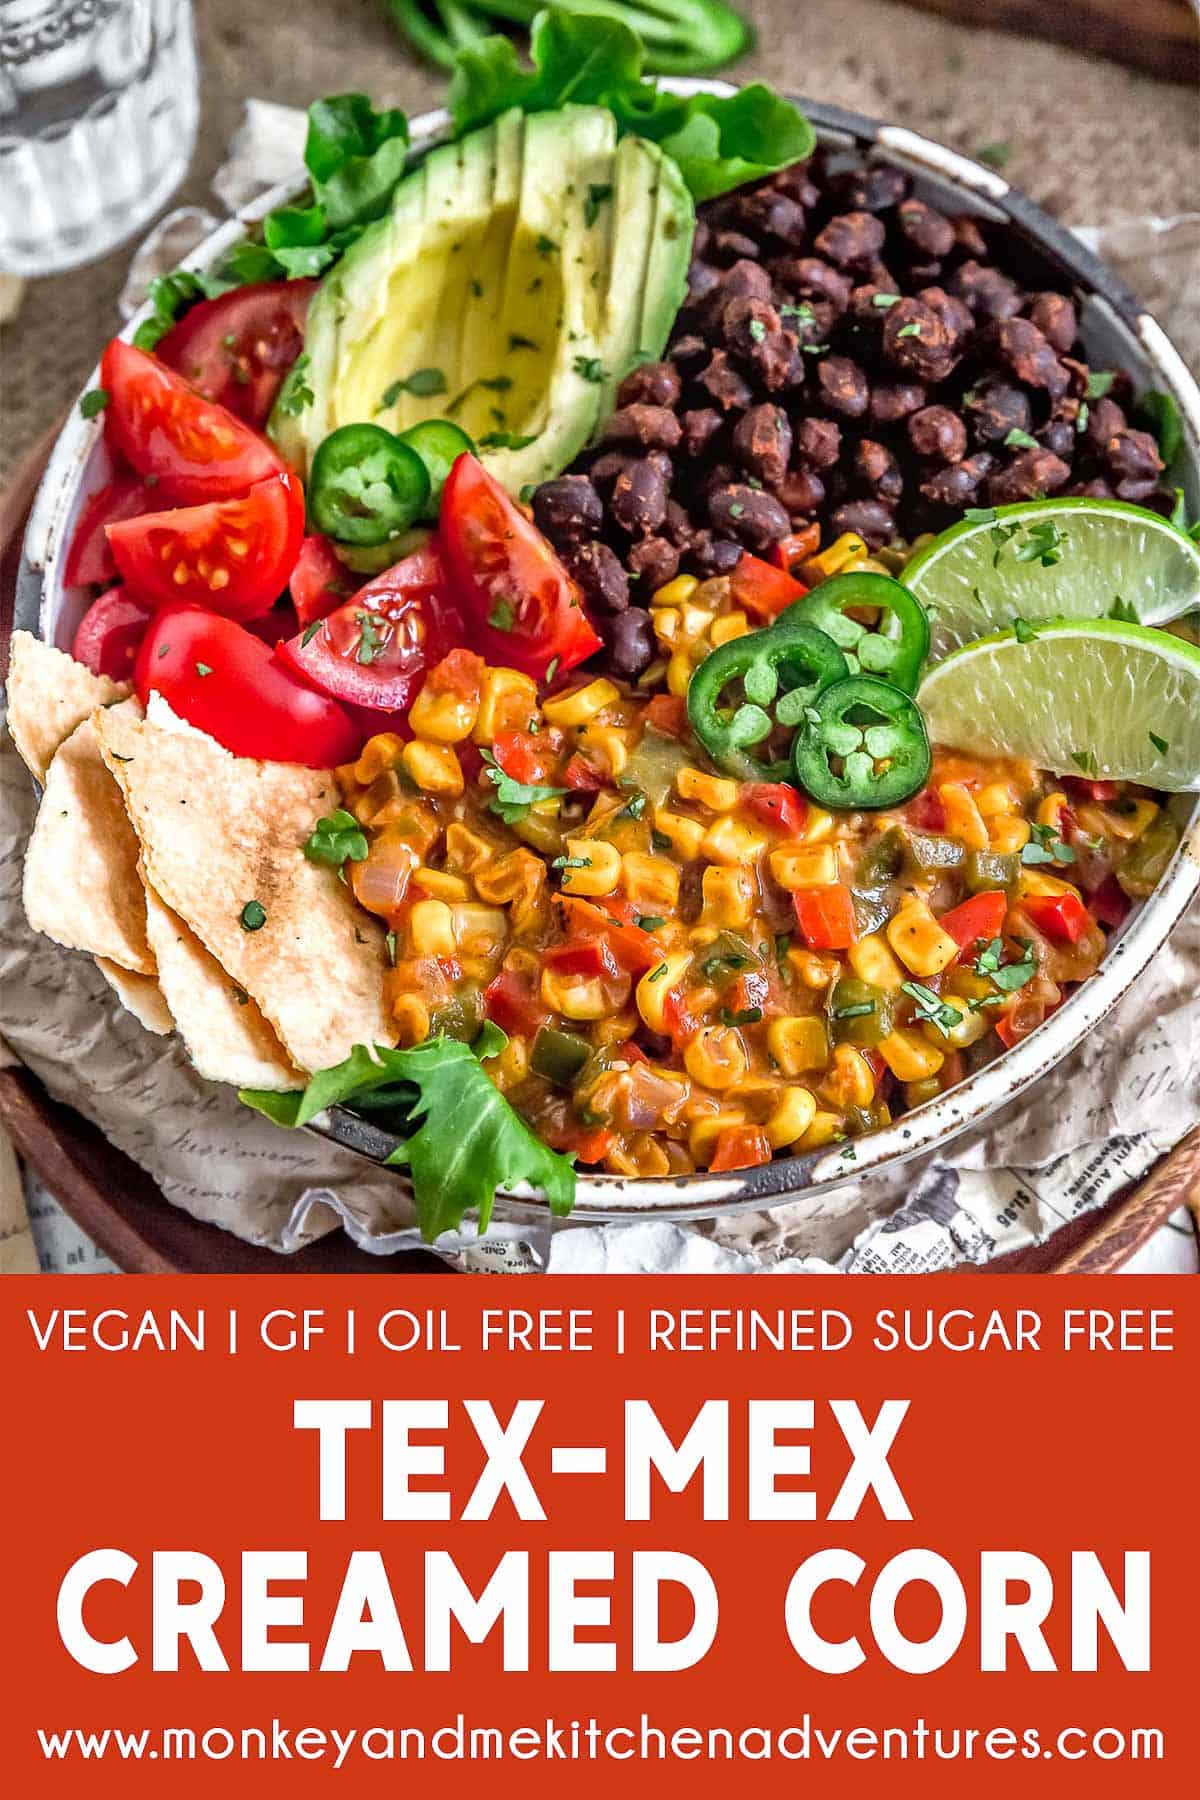 Tex-Mex Creamed Corn with text description